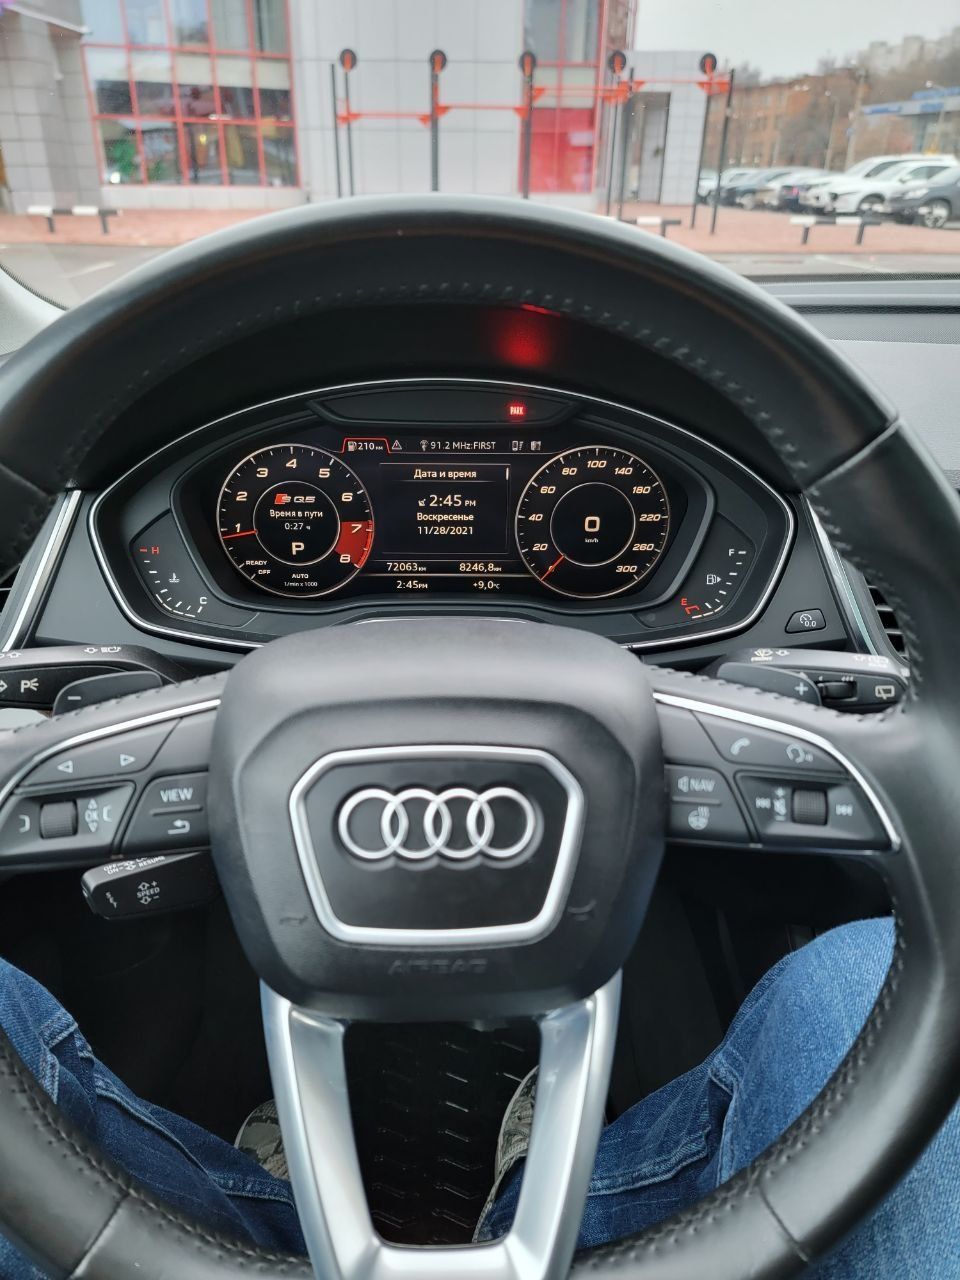 Audi Q5 80a FY 2017